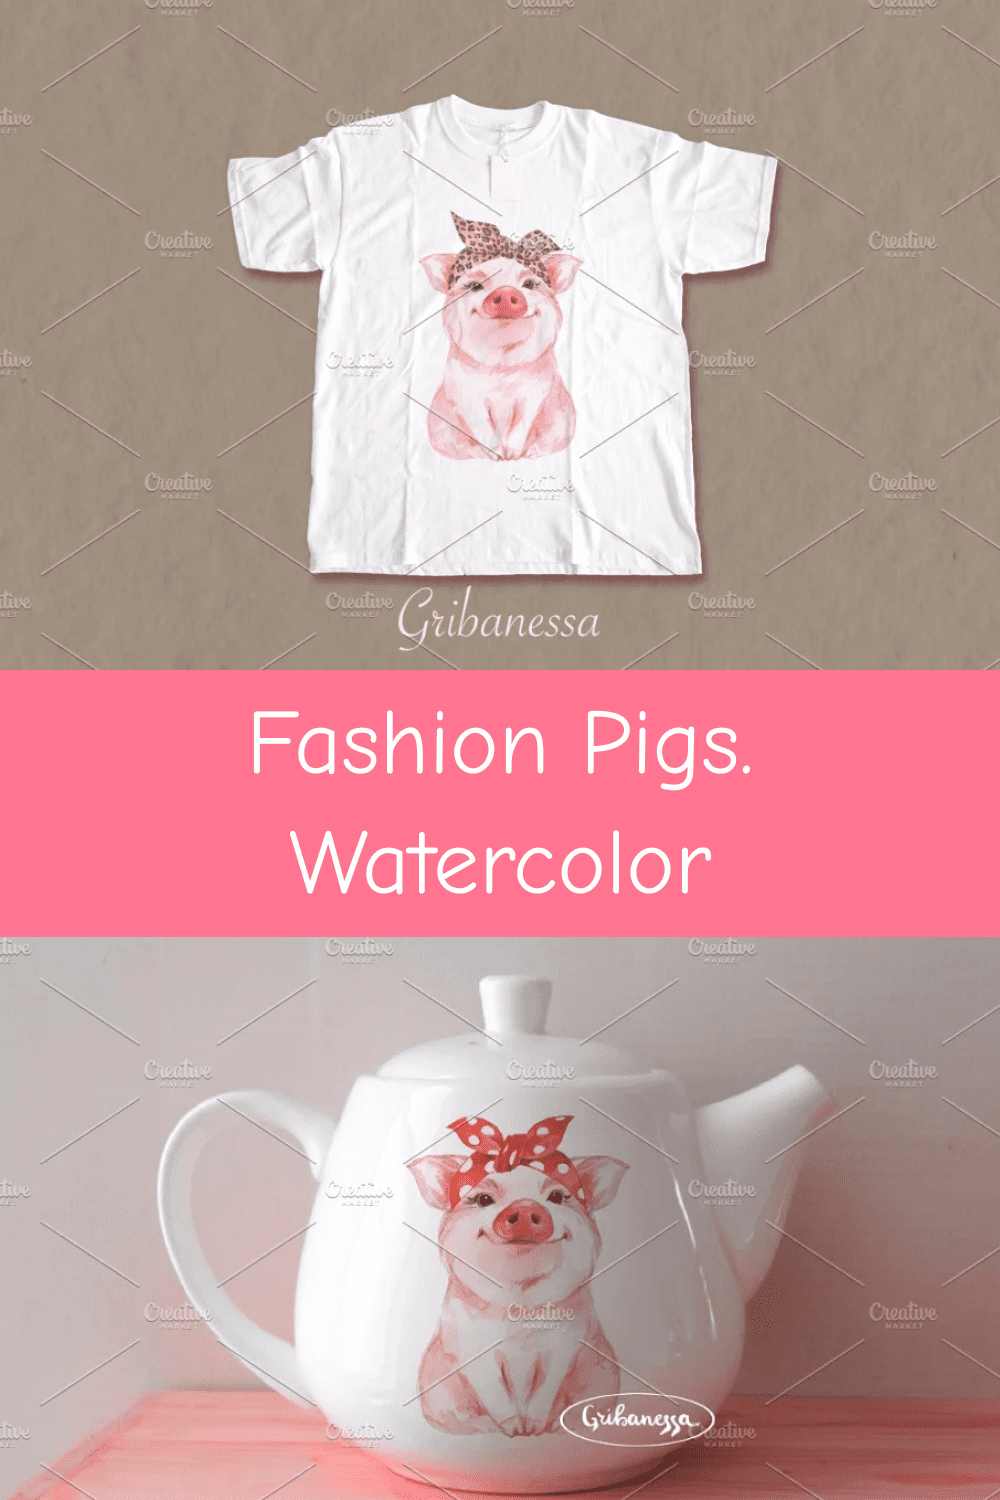 Fashion pigs. Watercolor.